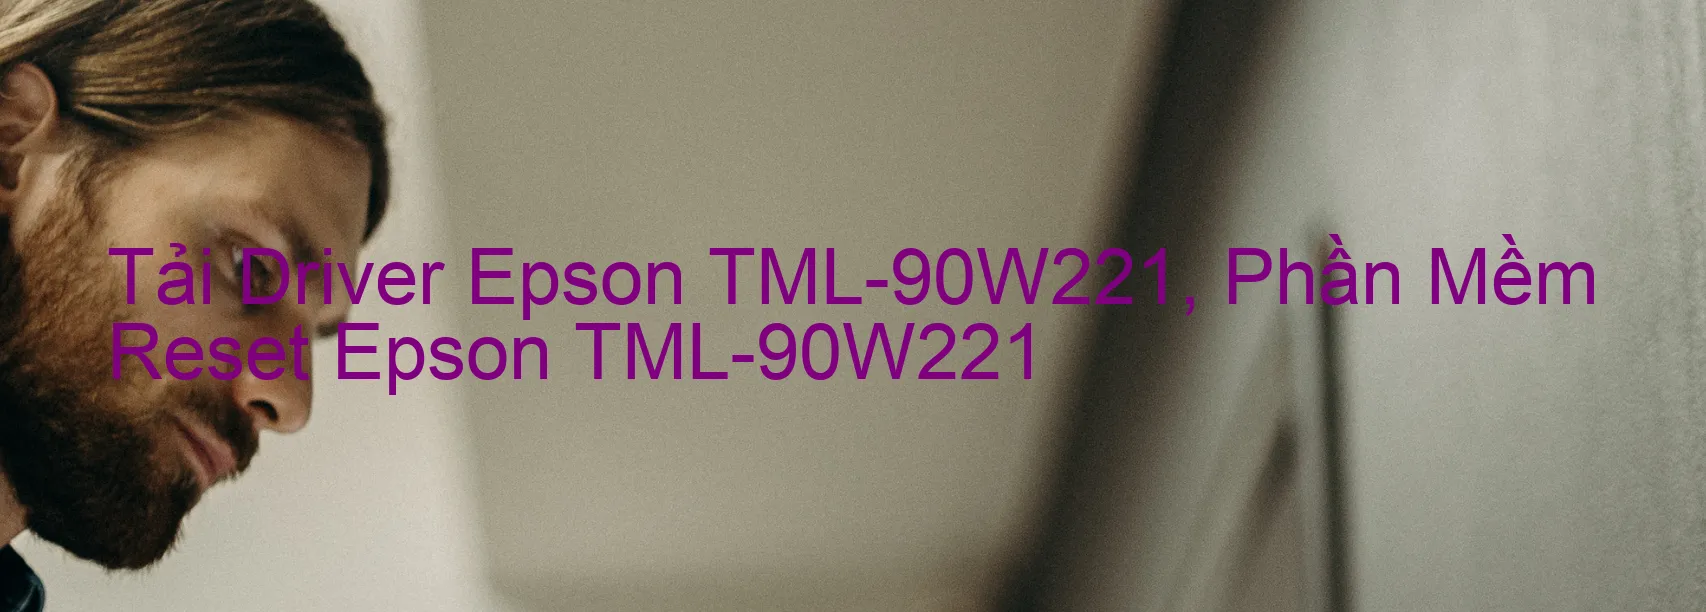 Driver Epson TML-90W221, Phần Mềm Reset Epson TML-90W221